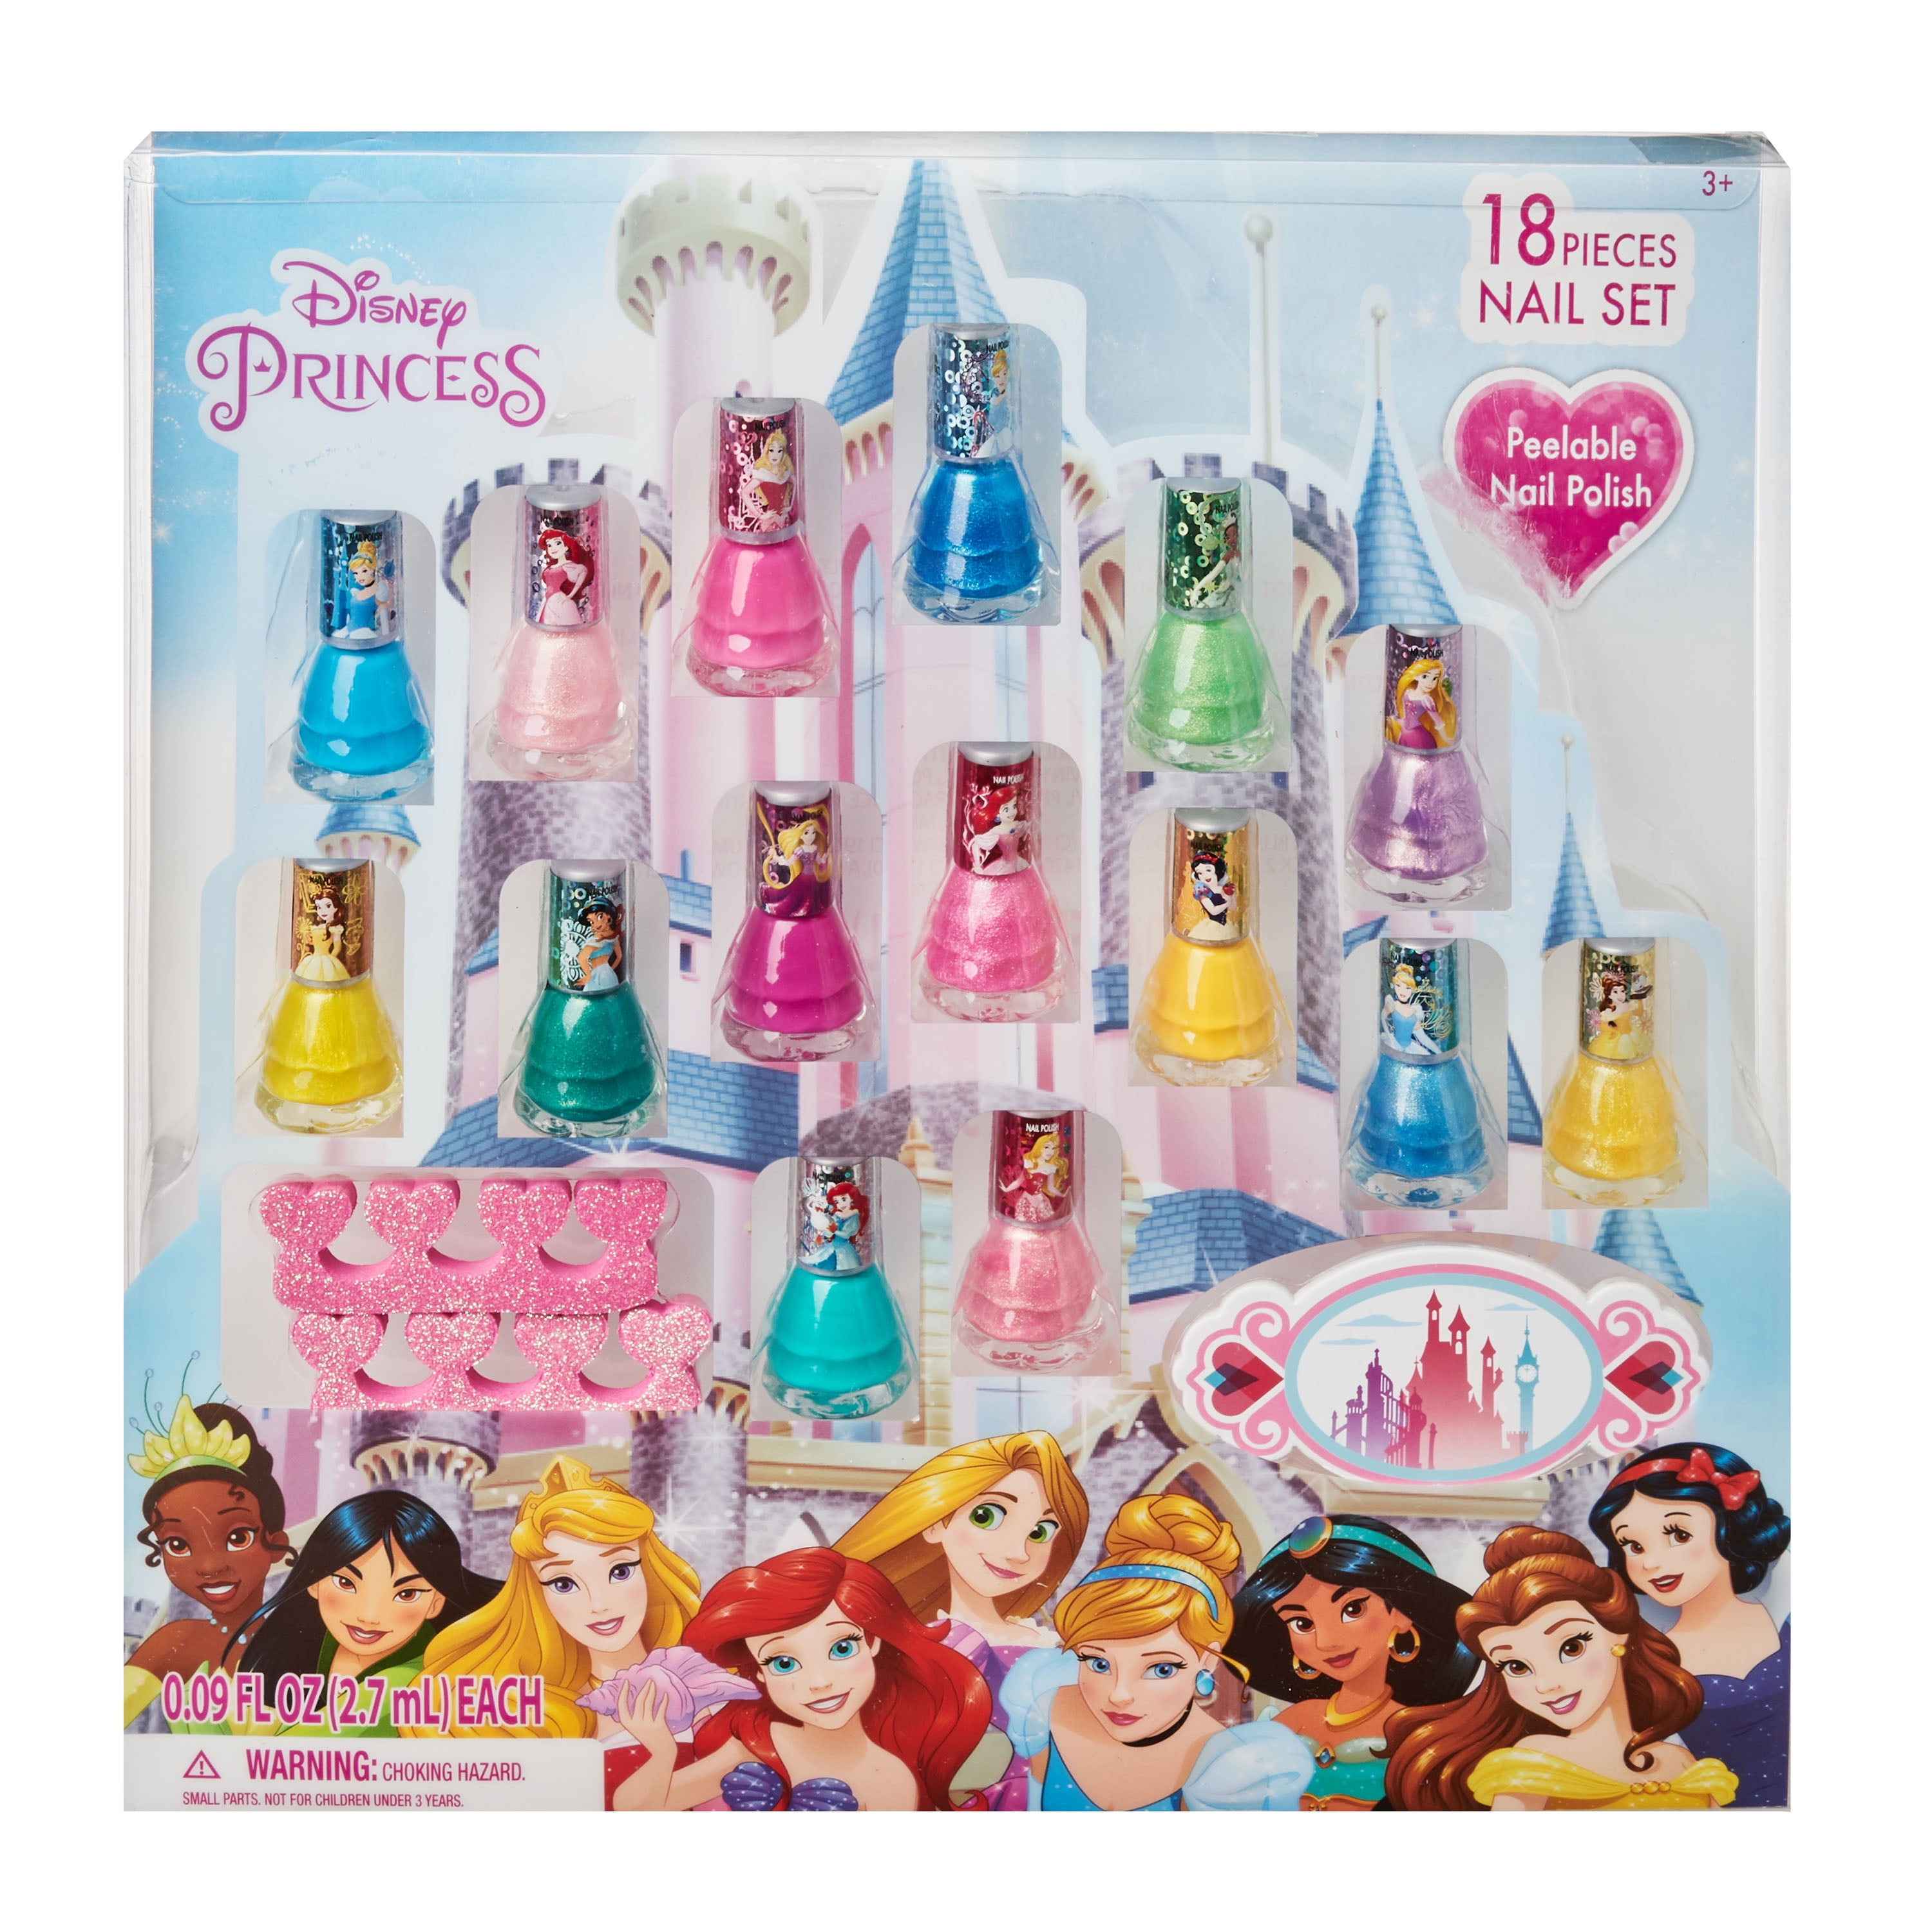 Disney Princess Deluxe Art Kit - Disney Store 1 ct